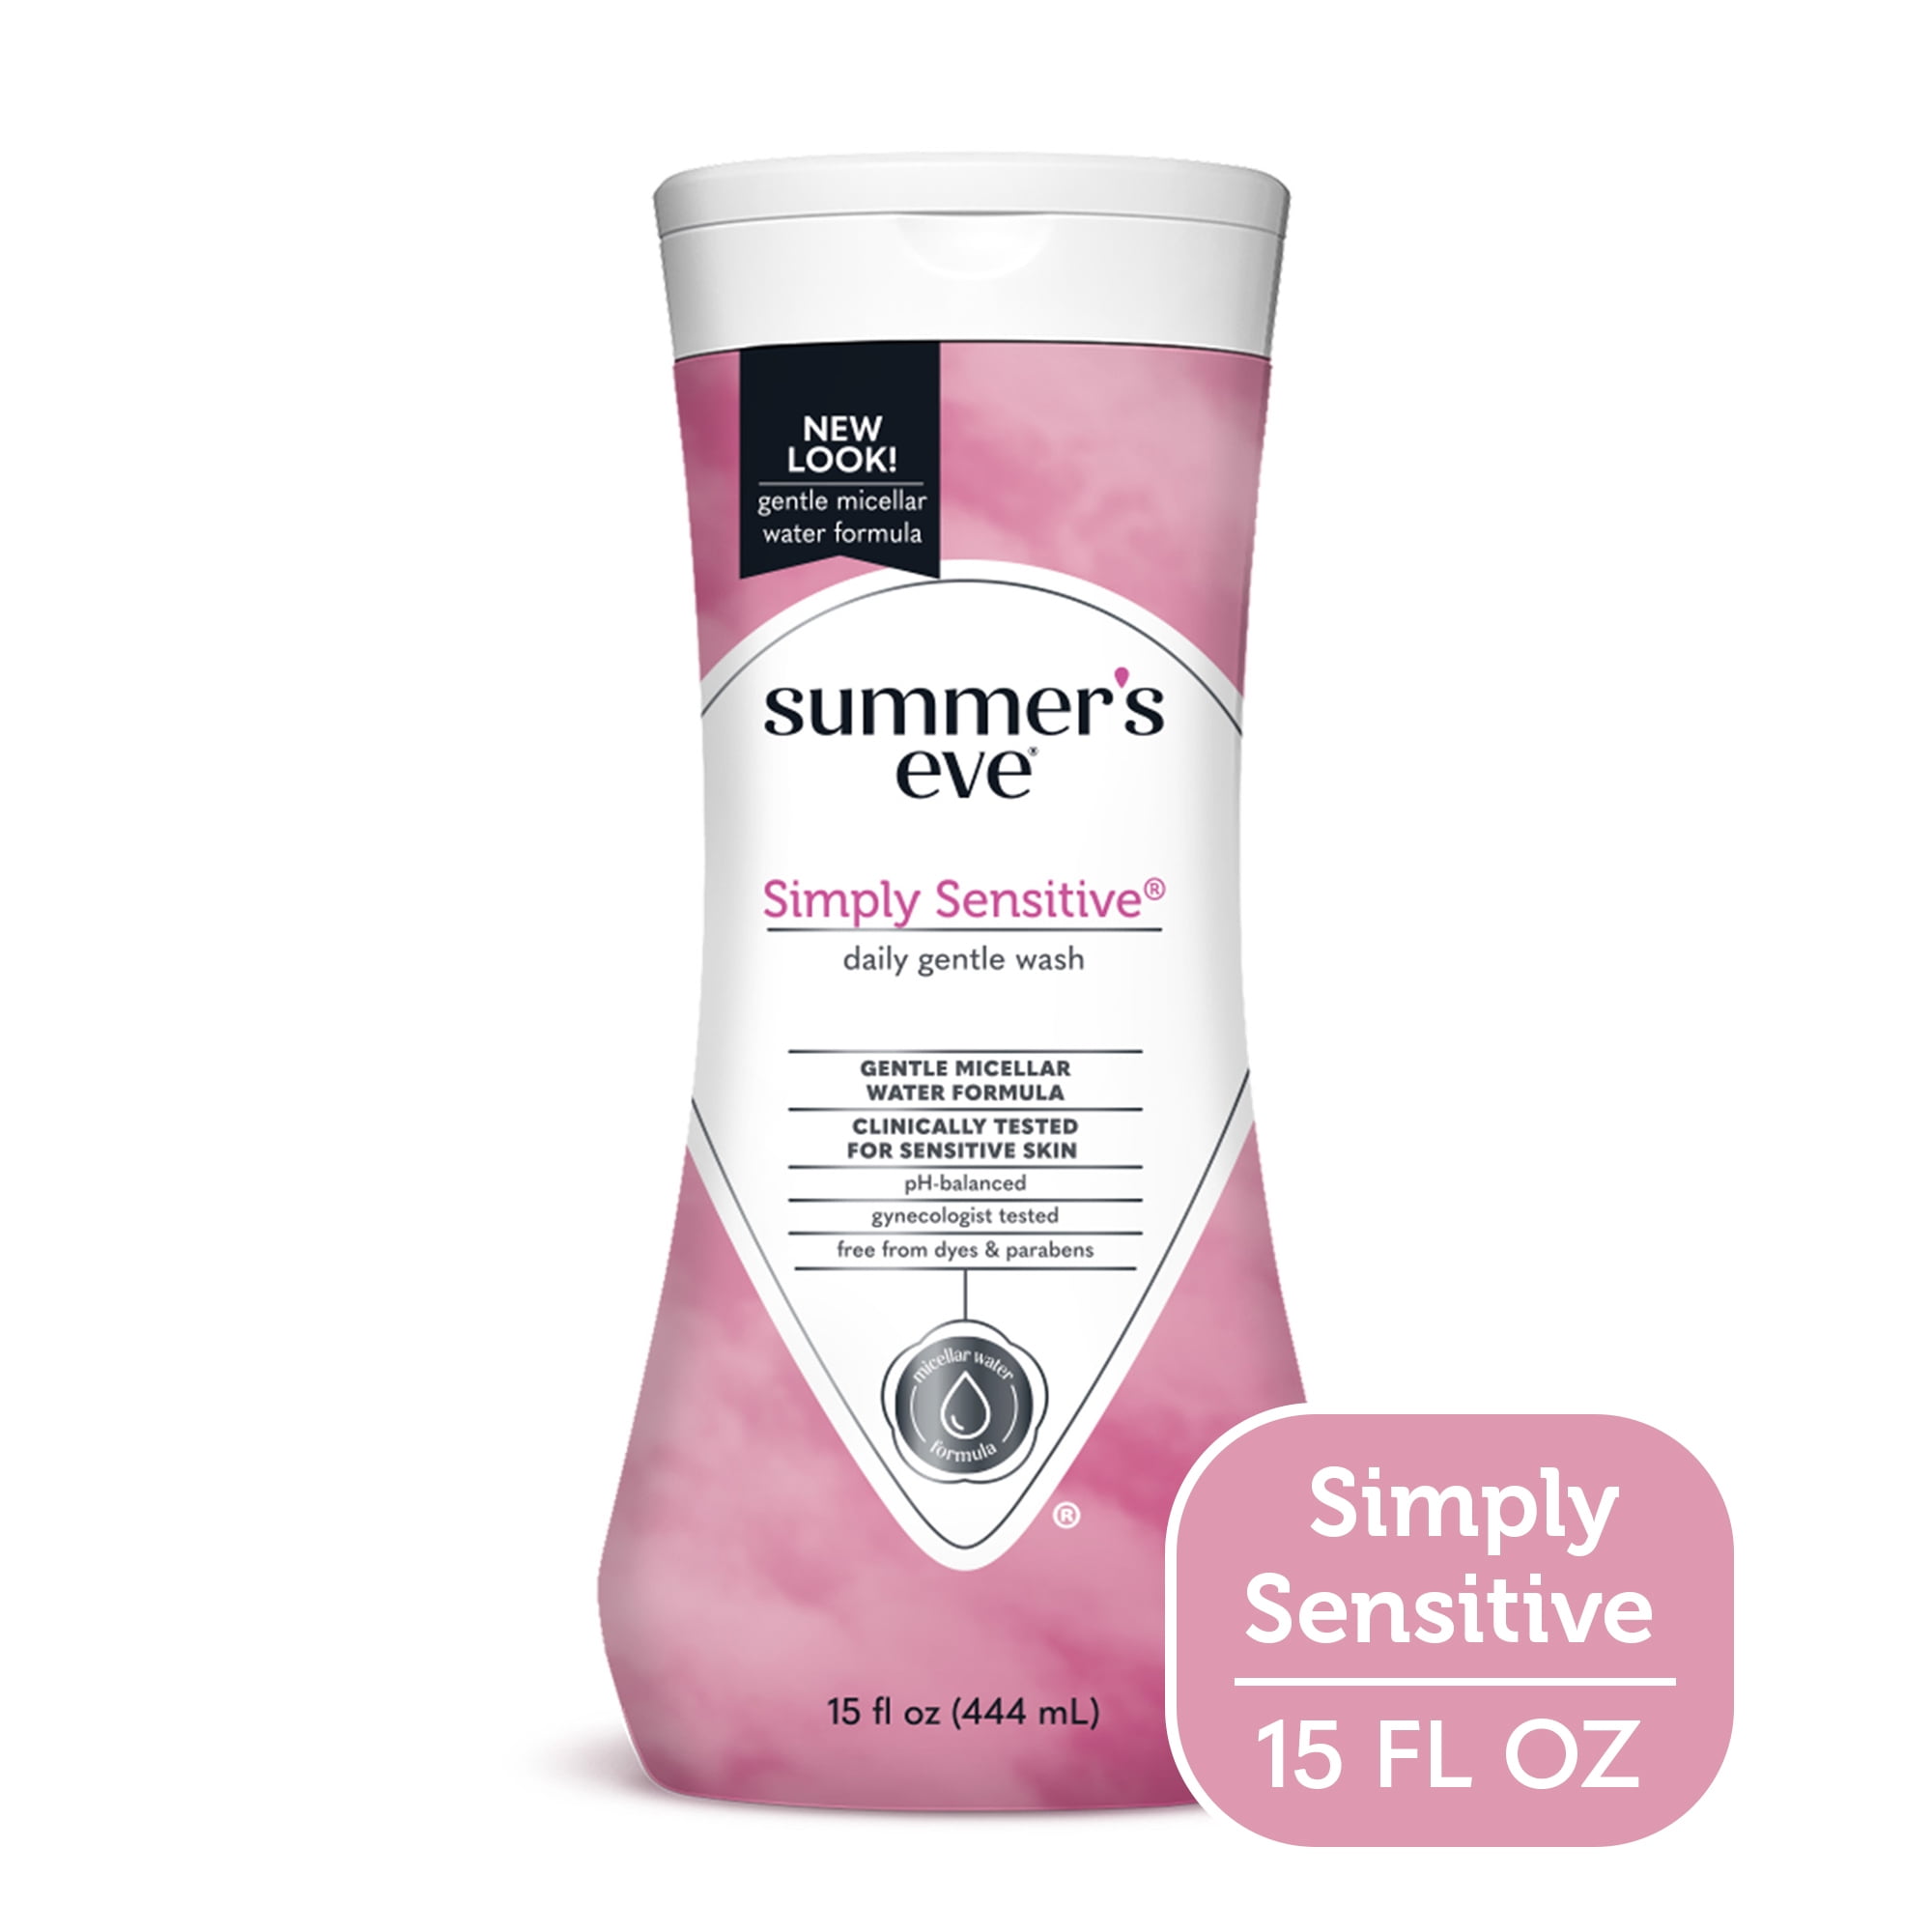 Summers Eve Simply Sensitive Daily Gentle Feminine Wash, Removes Odor, pH balanced, 15 fl oz